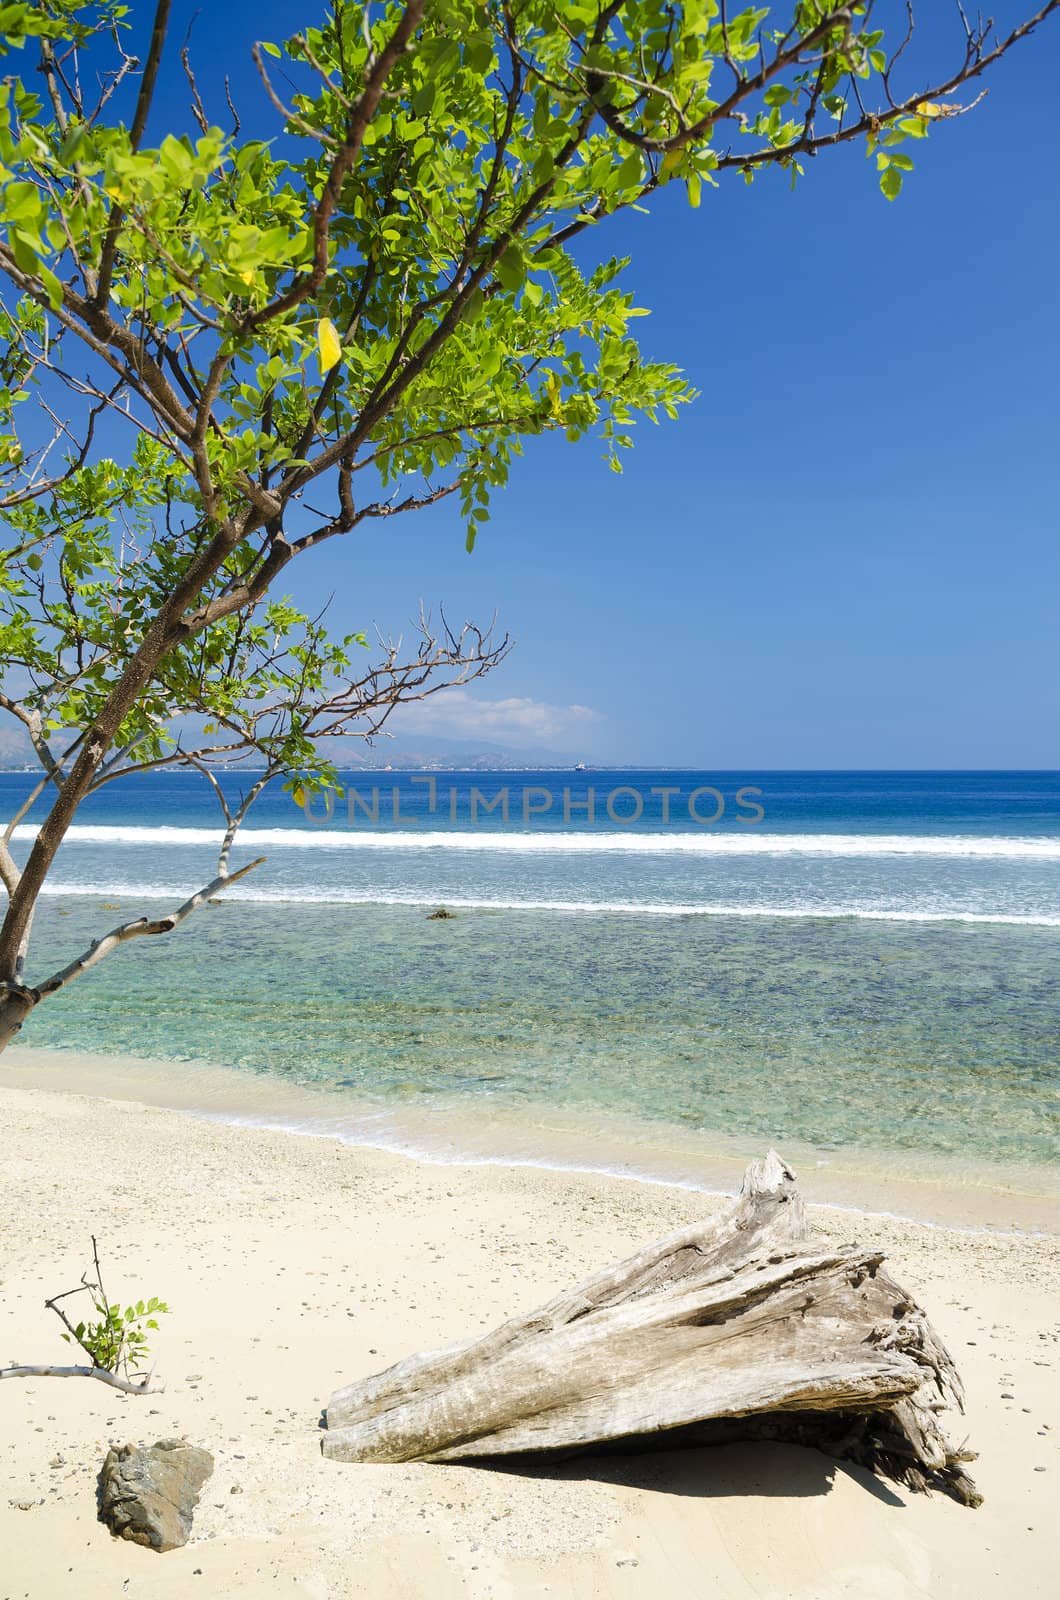 beach and coast near dili in east timor by jackmalipan